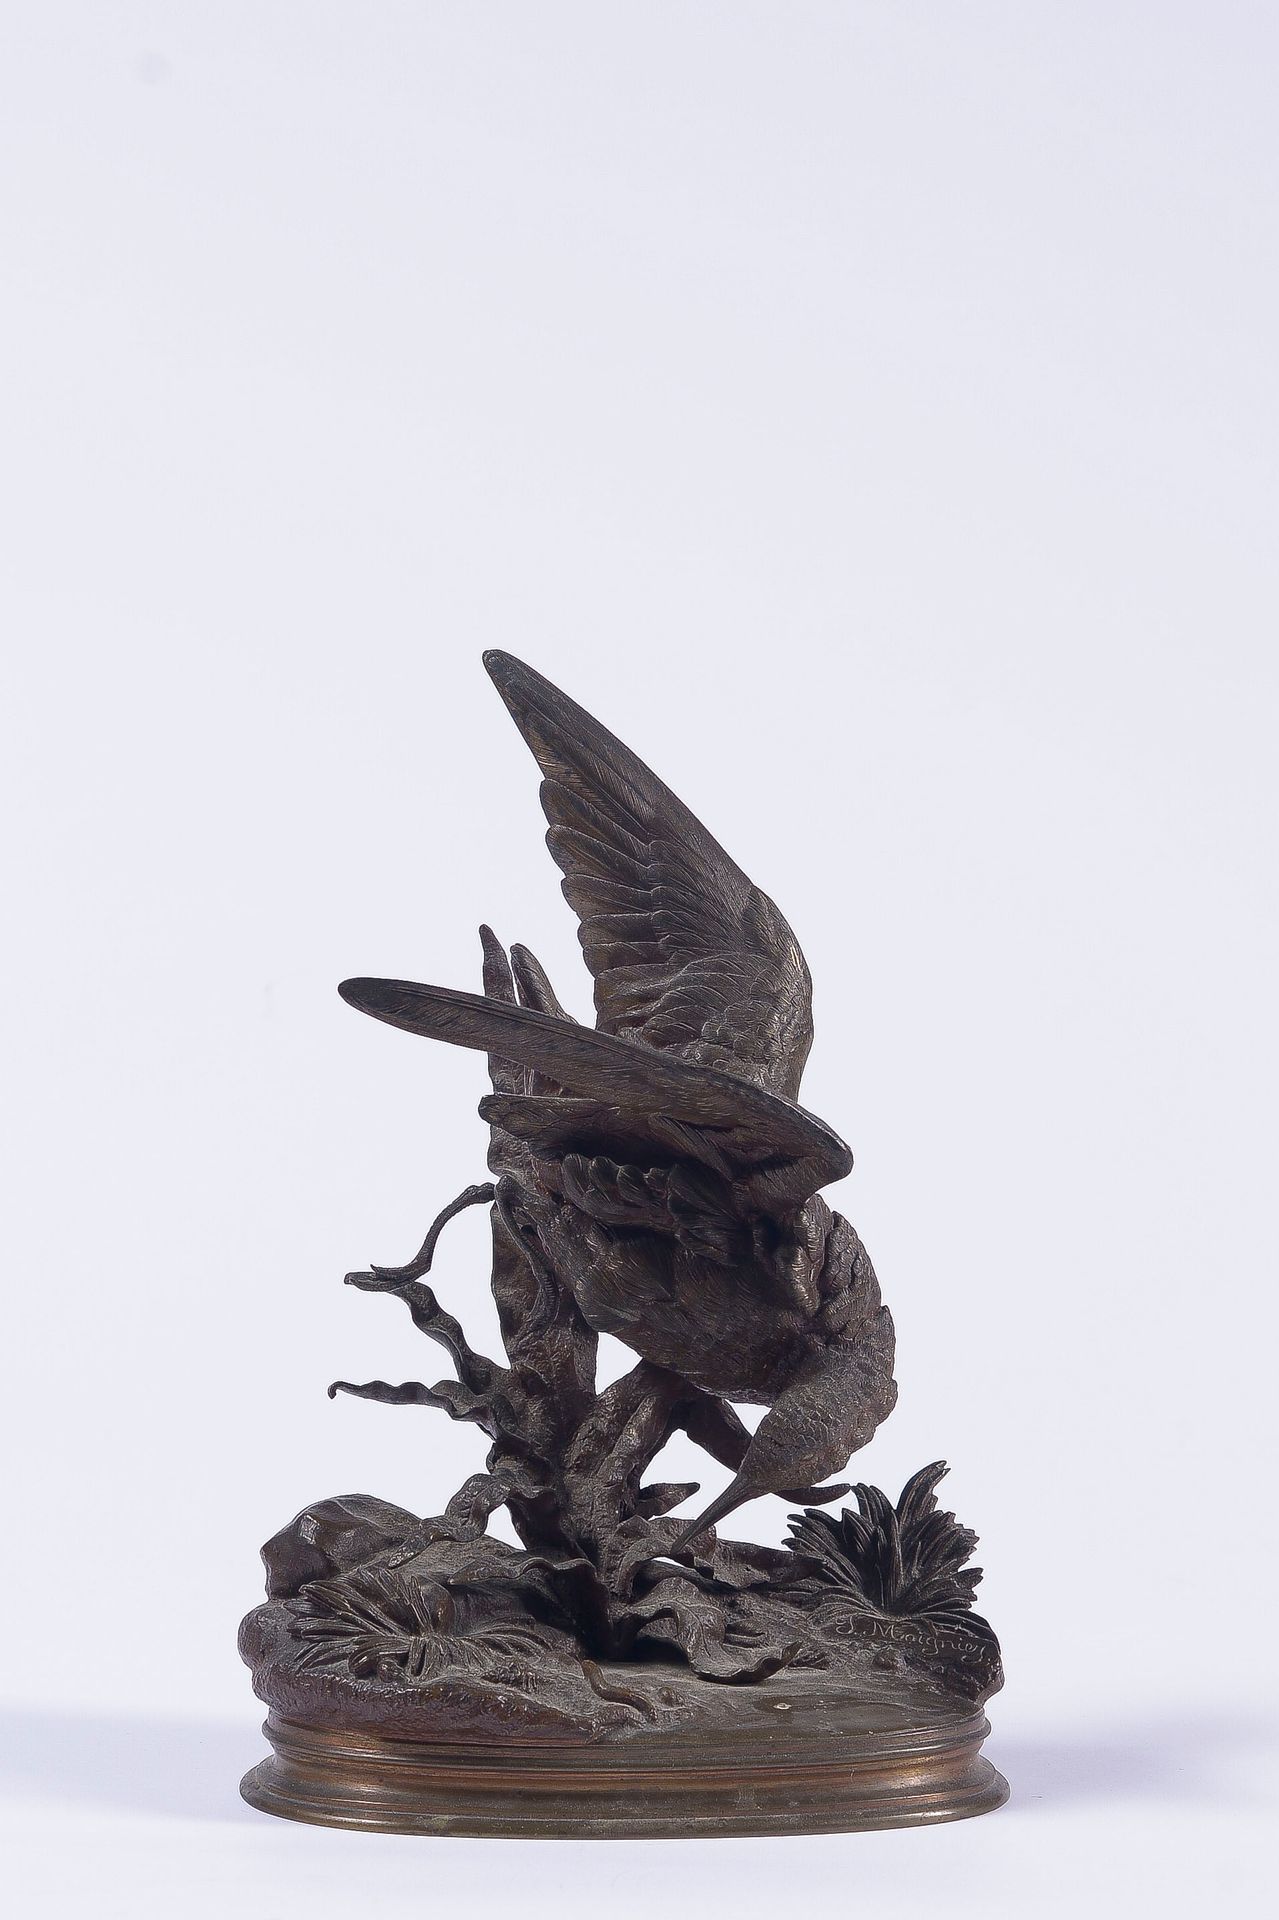 Null Según Jules MOIGNIEZ (1835-1894)

Woodcock 

Prueba en bronce con pátina ma&hellip;